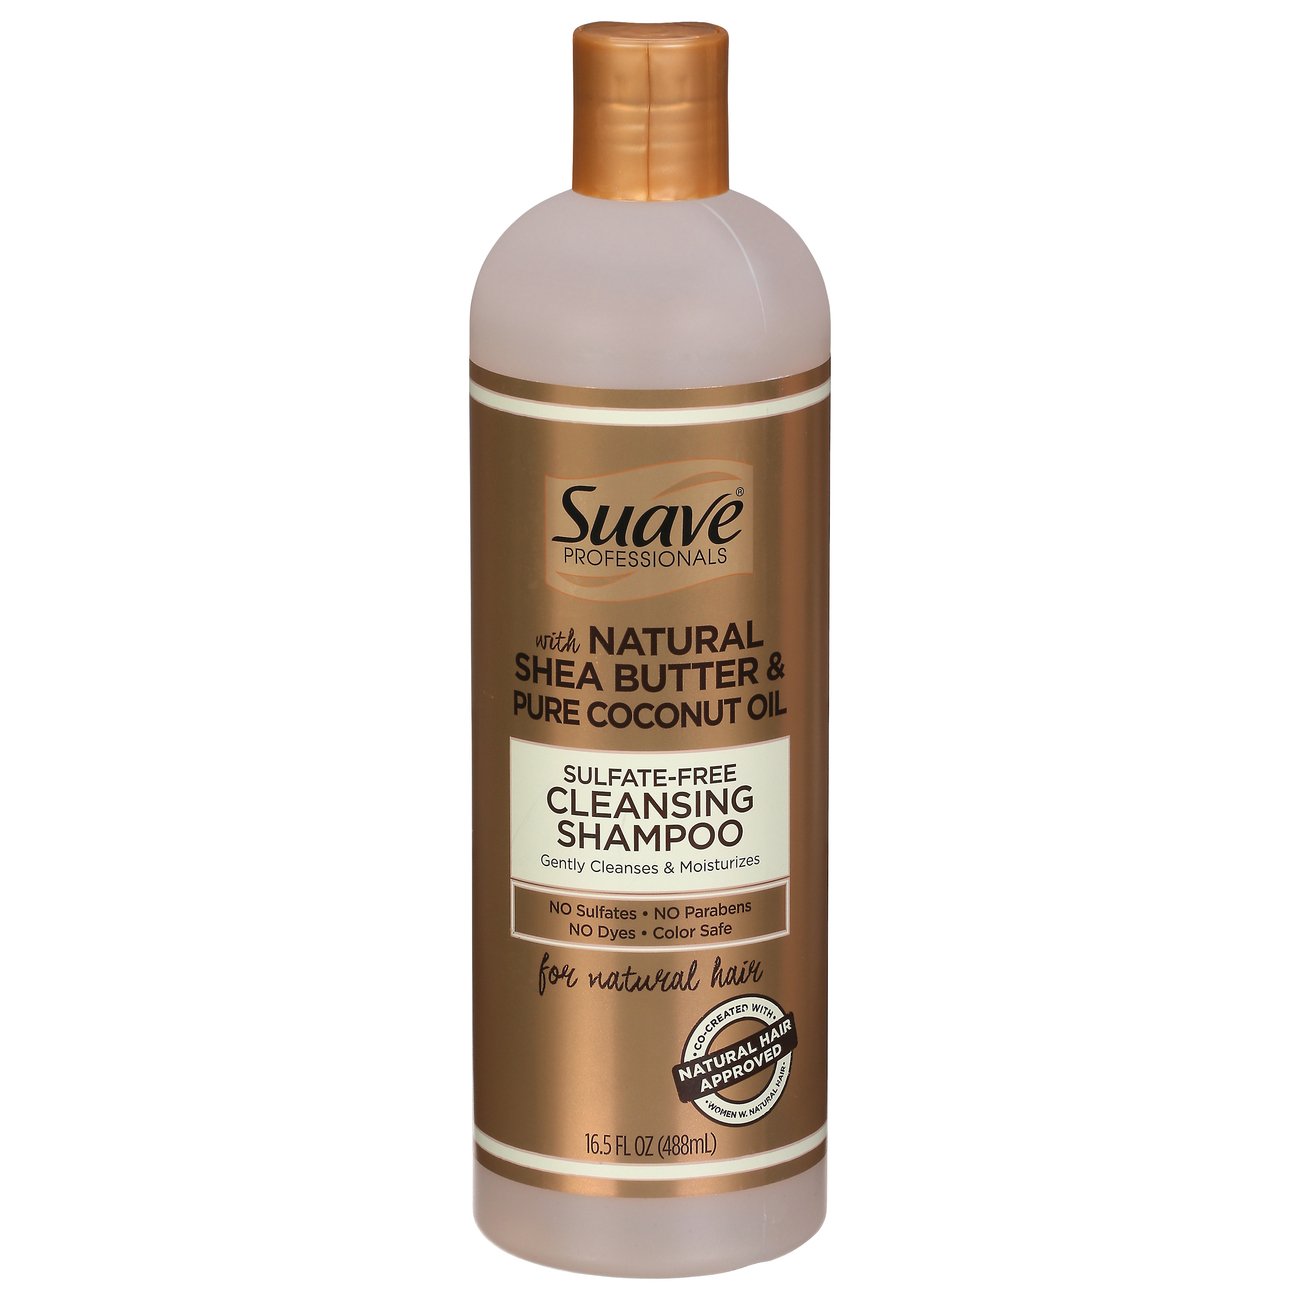 Professor Søjle Amorous Suave Professionals Sulfate-Free Cleansing Shampoo - Shop Shampoo &  Conditioner at H-E-B